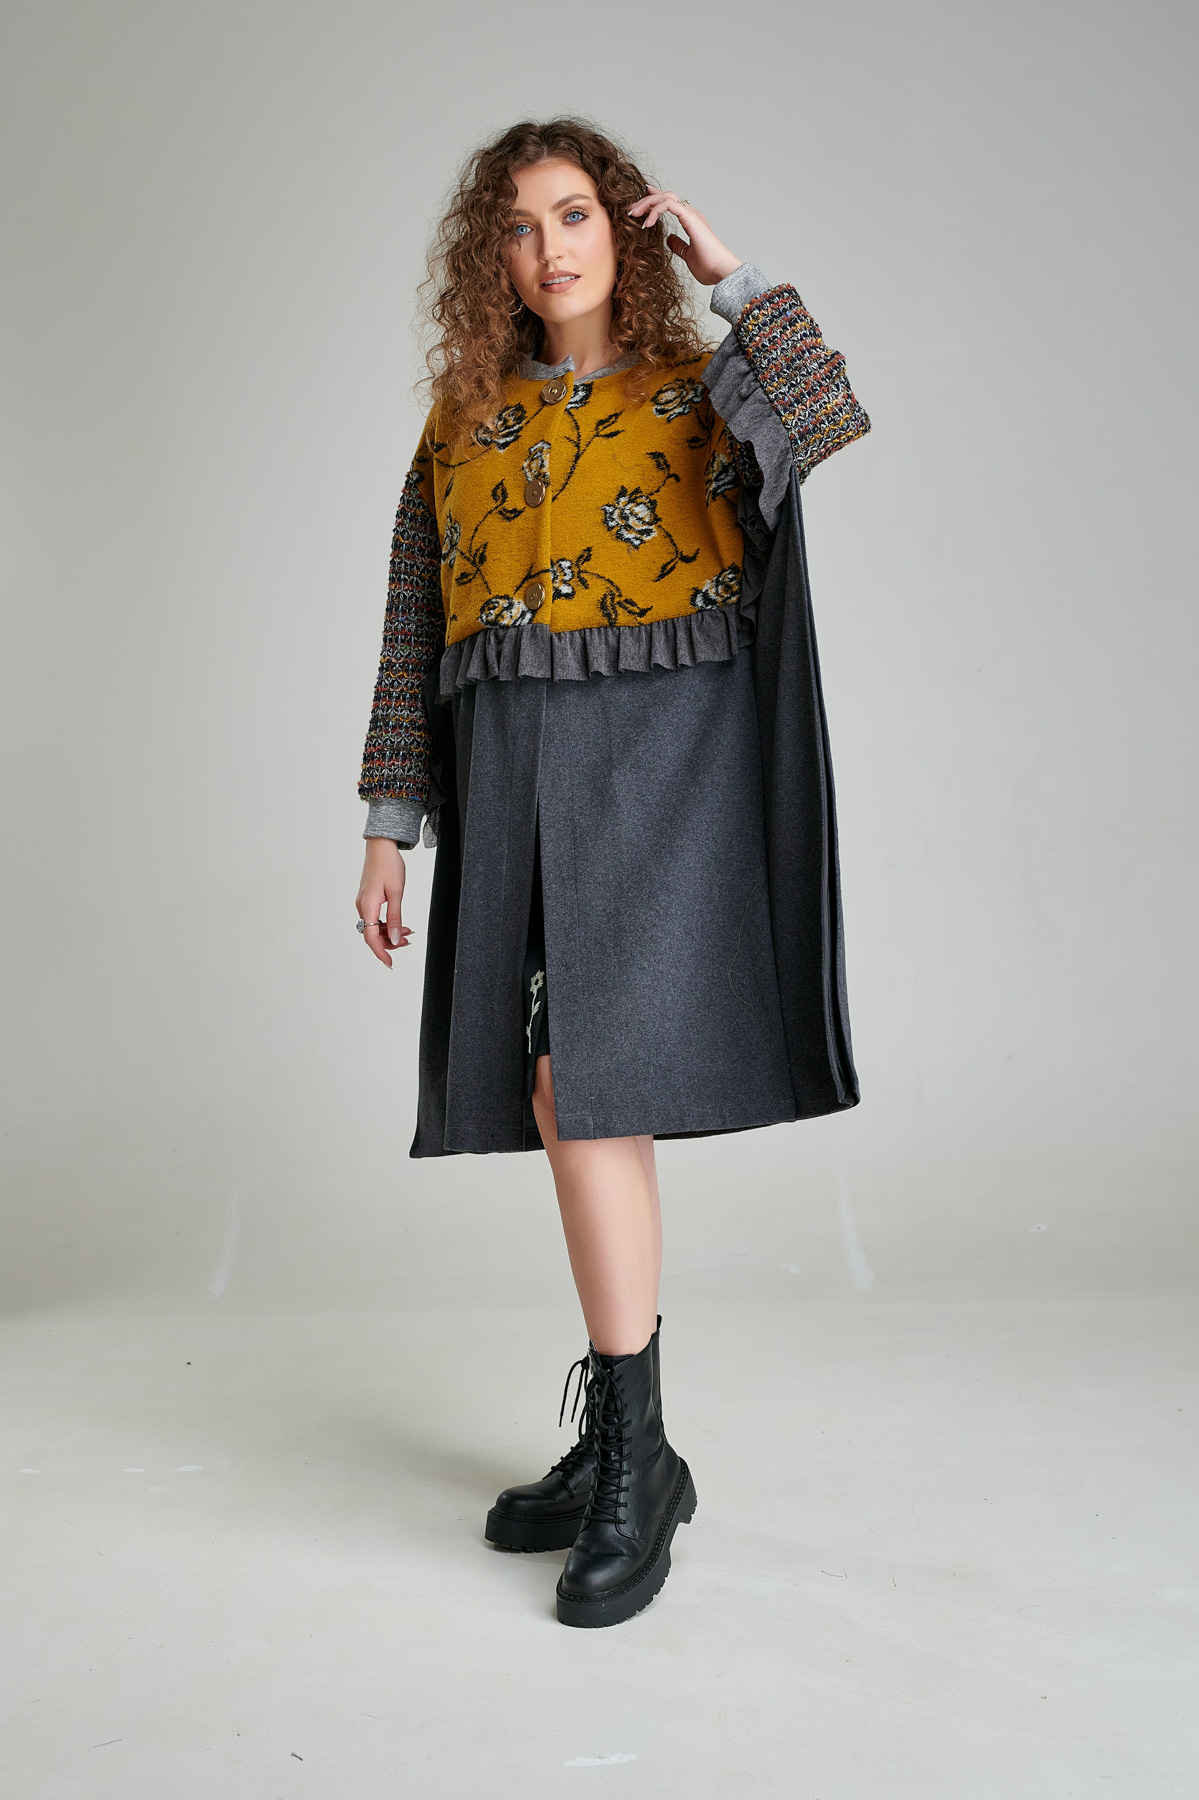 DALTON oversize mustard wool overcoat. Natural fabrics, original design, handmade embroidery